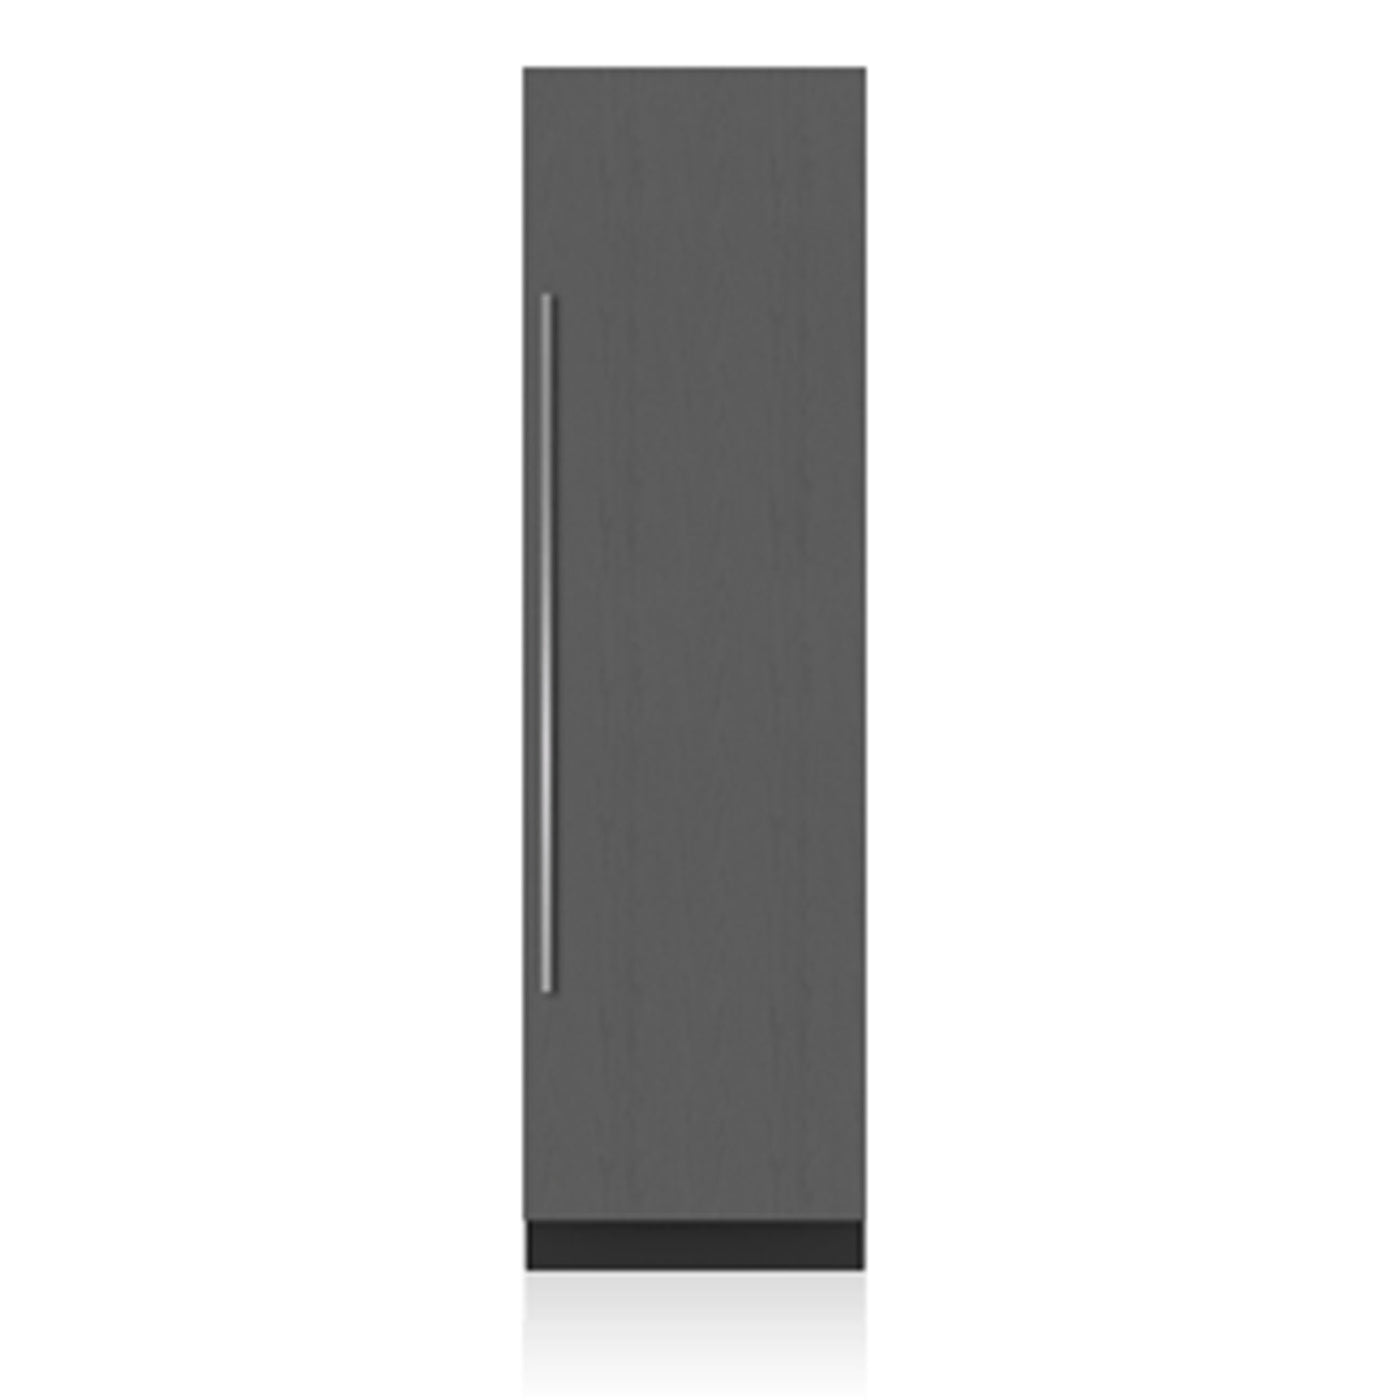 24" Designer Column Refrigerator - Panel Ready